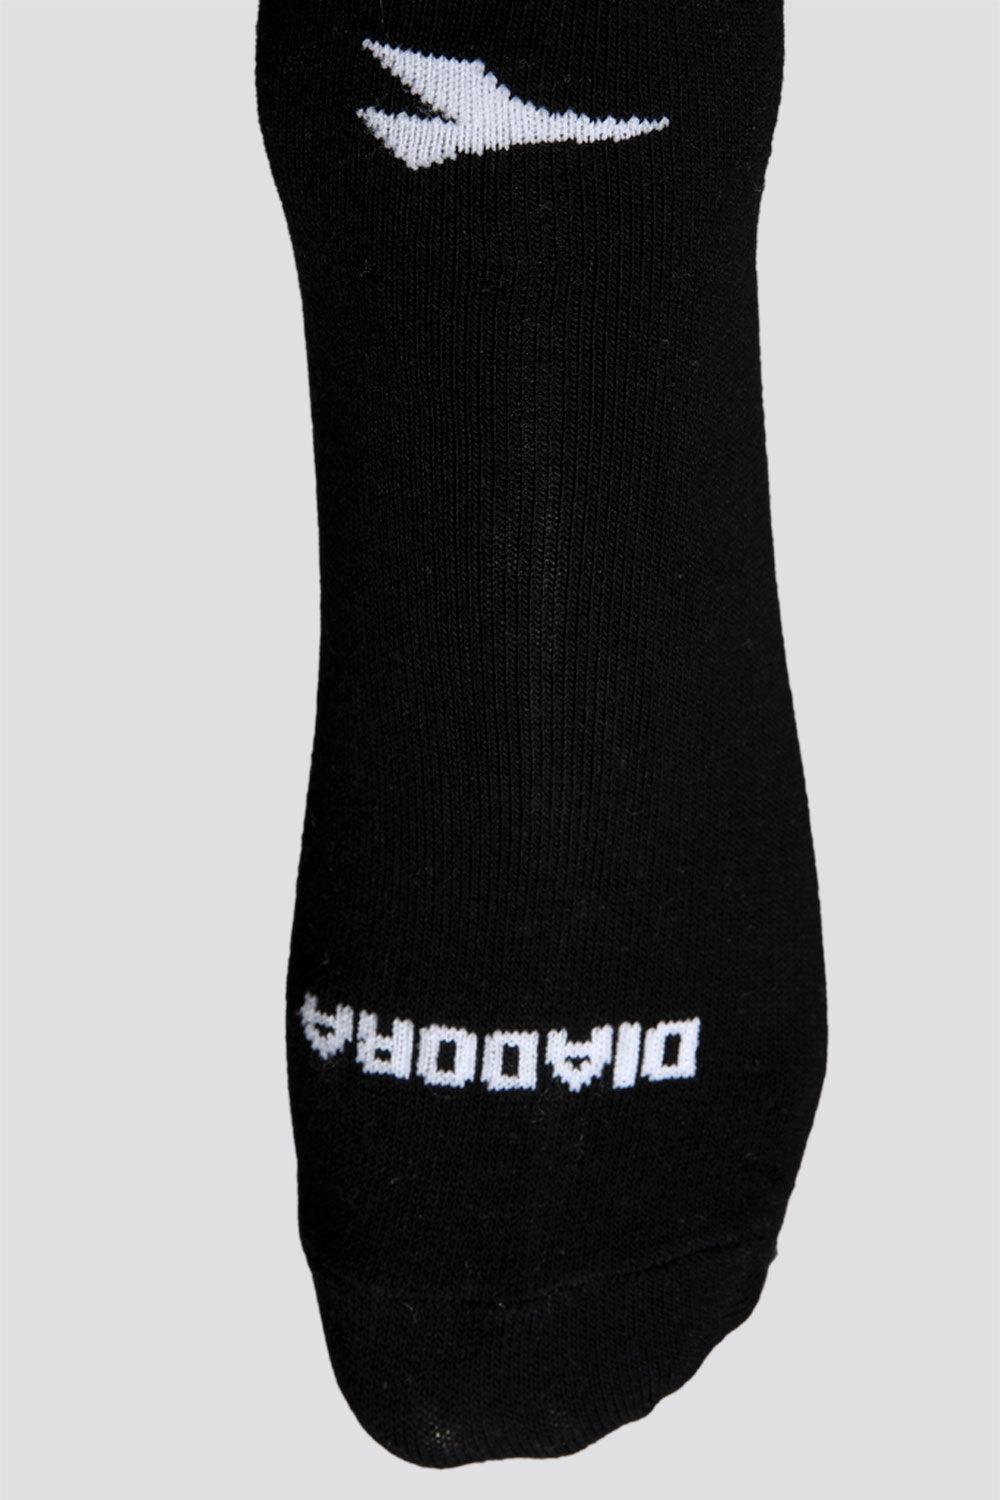 DIADORA - 5 זוגות גרביים אורך קצר 41-46 שחור/לבן - MASHBIR//365